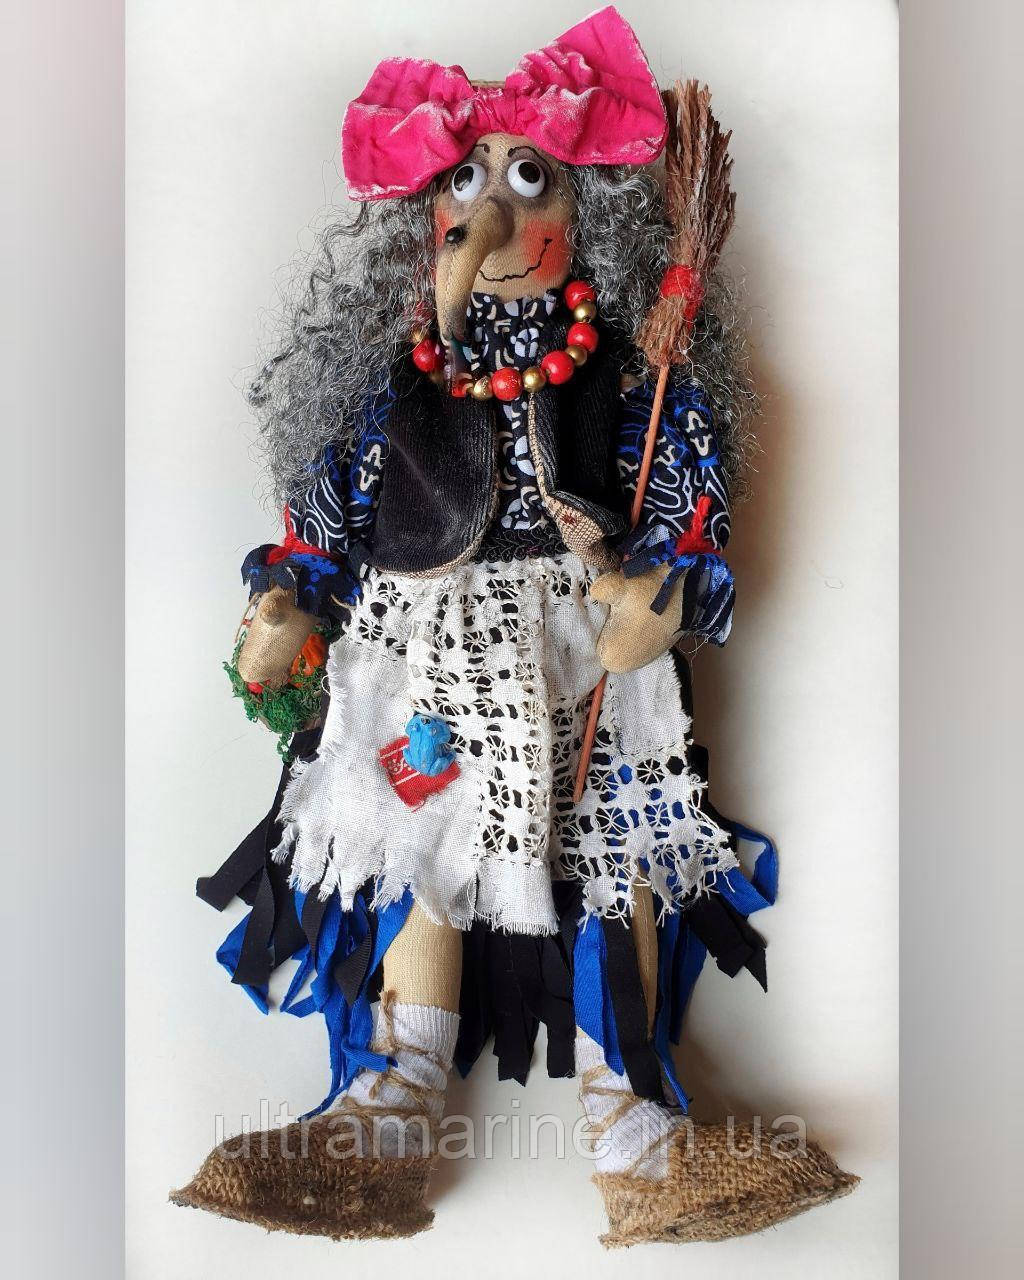 Кукла "Баба Яга с метлой" - оберег ручной работы (40х15 см) хендмейд  игрушка-сувенир на подарок или для дома, цена 490 грн - Prom.ua  (ID#1394202971)